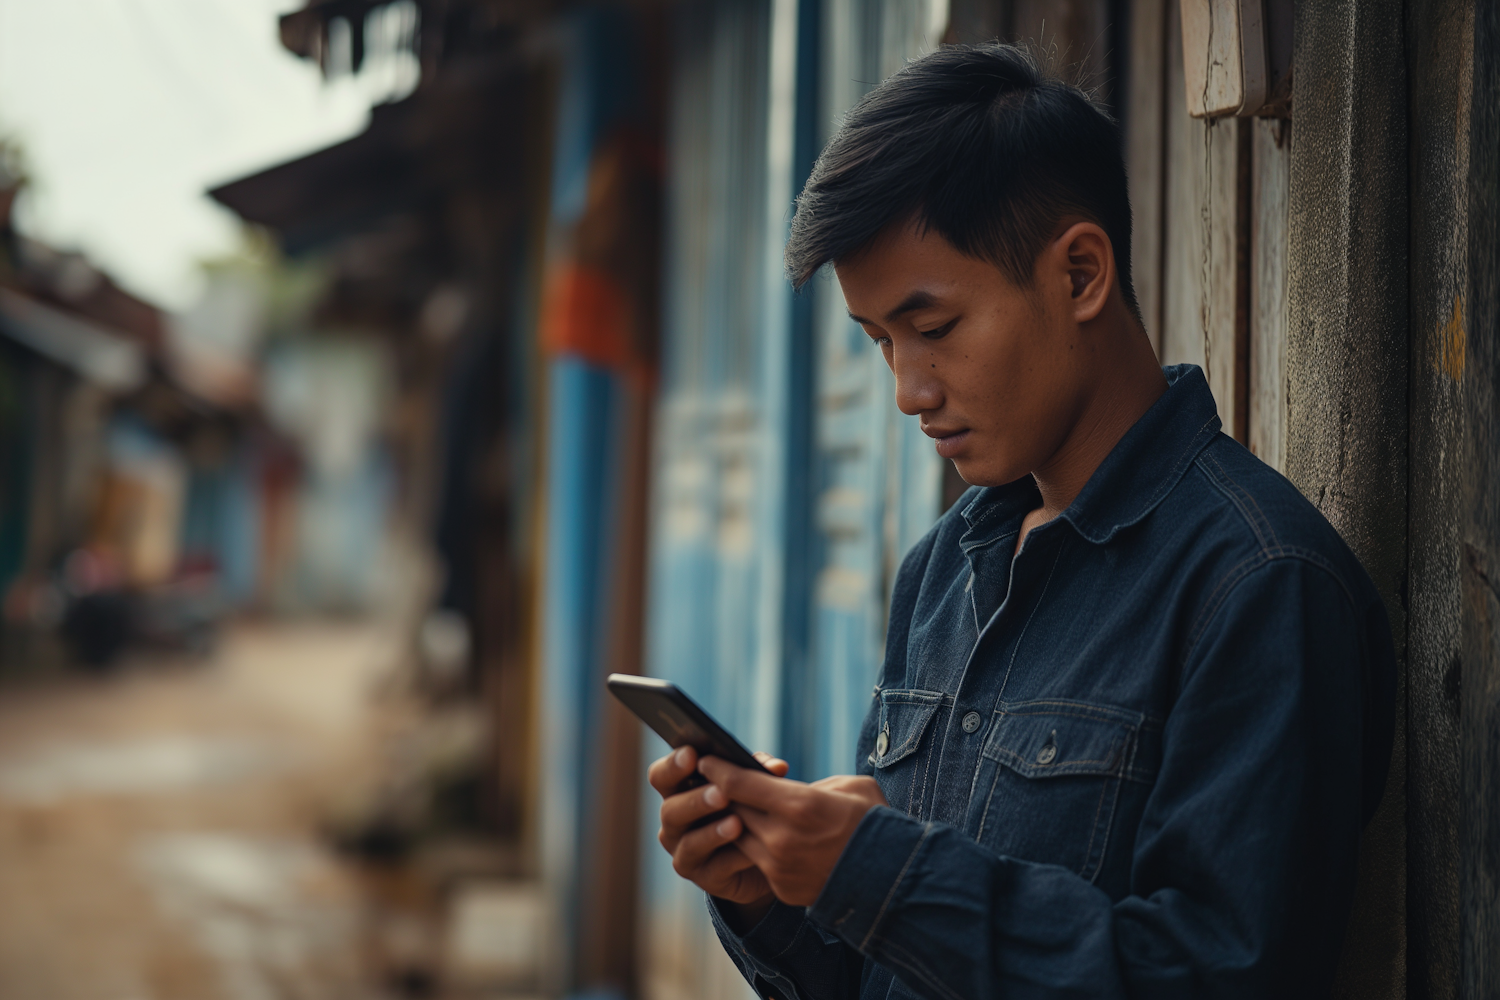 Urban Serenity: Denim-Clad Youth Engrossed in His Smartphone